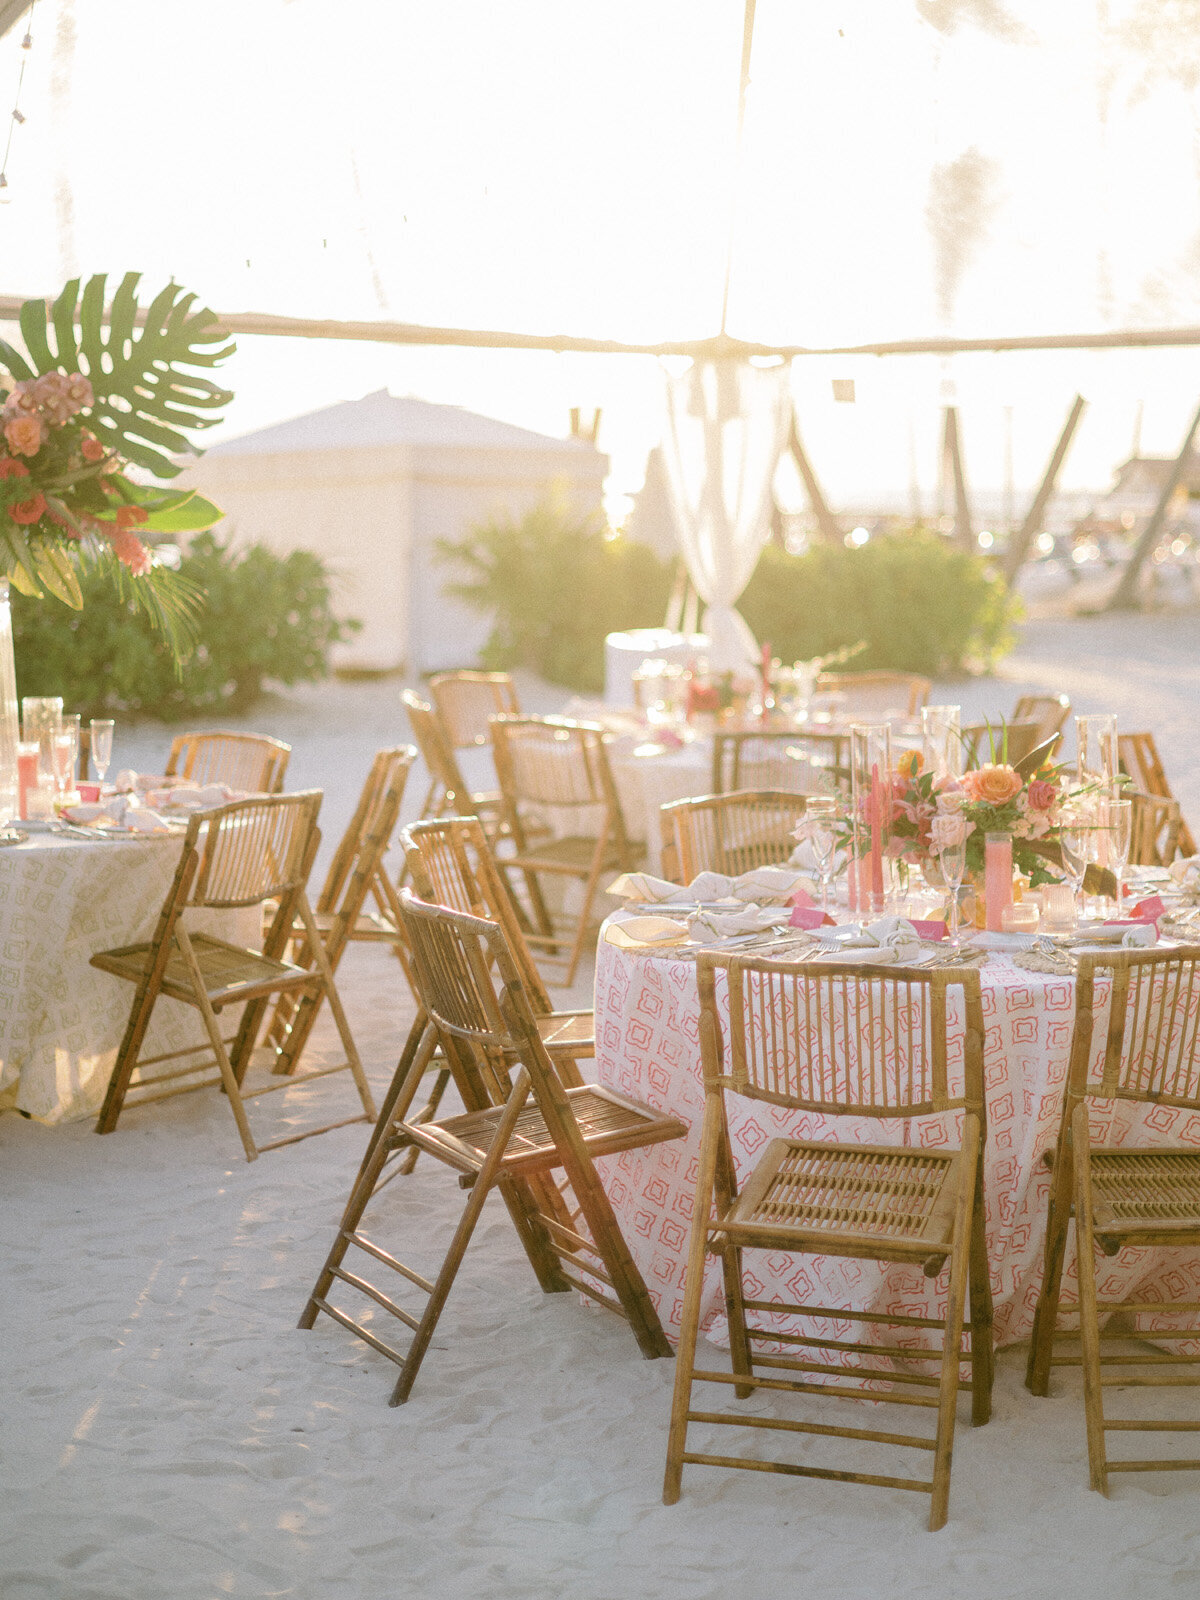 Kate-Murtaugh-Events-destination-wedding-planner-tropical-tented-reception-golden-hour-light